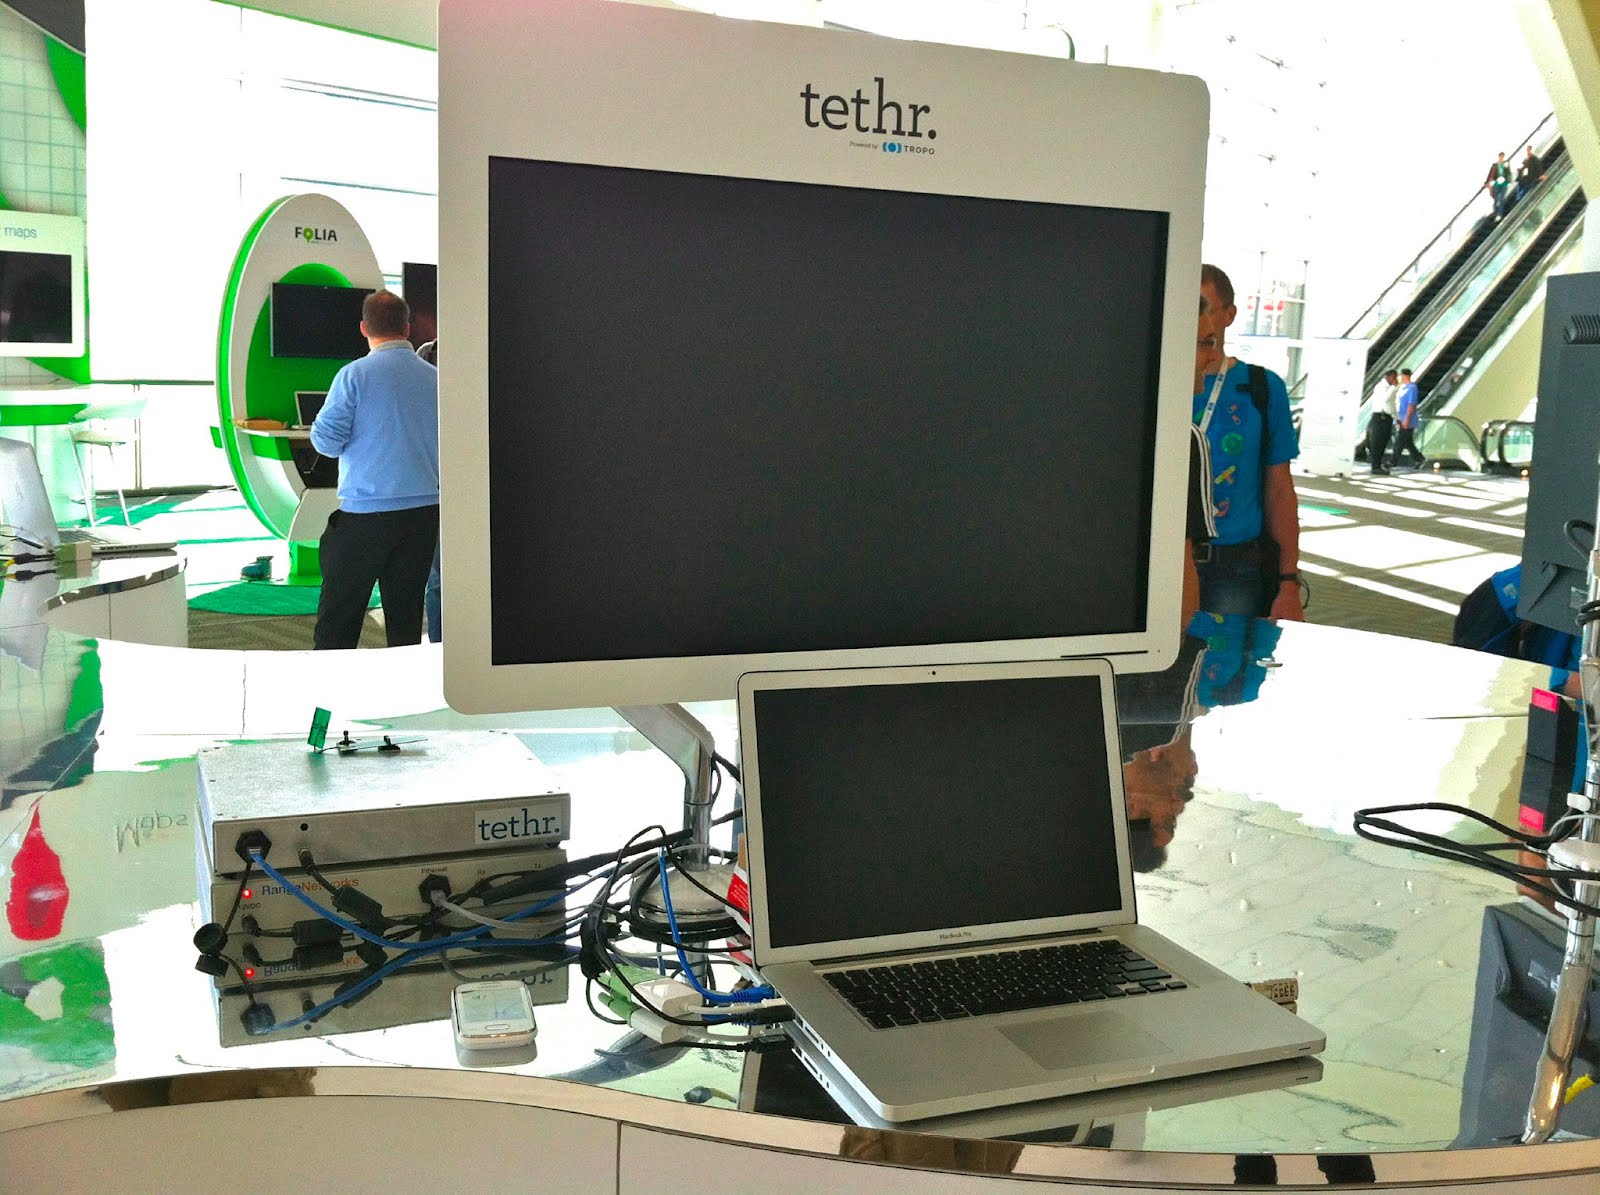 Tethr/Tropo demo at Google I/O 2012